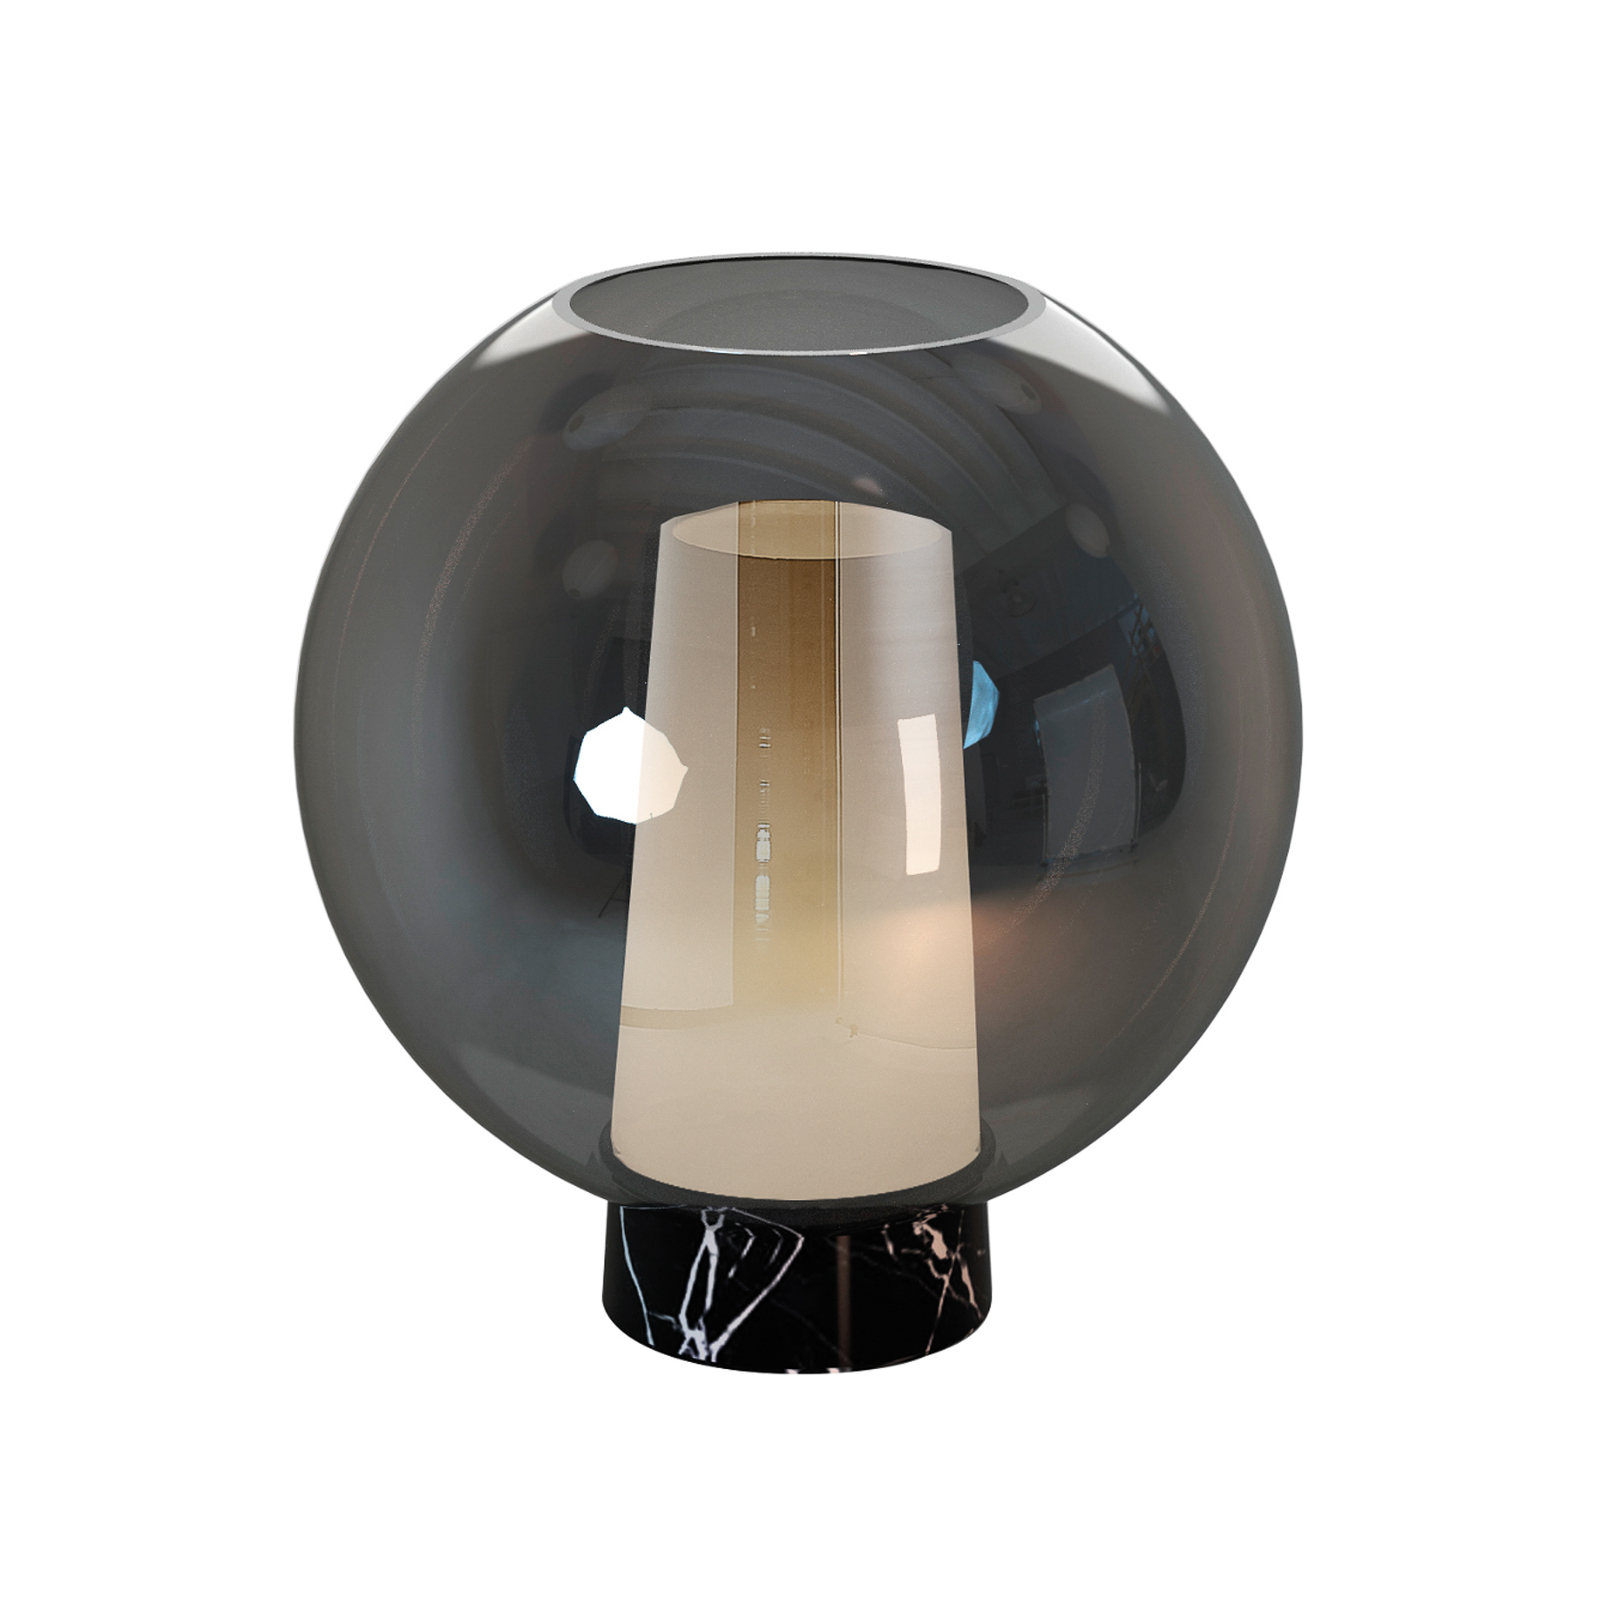 Nora bordlampe, sort-krom, højde 26 cm, glas, metal